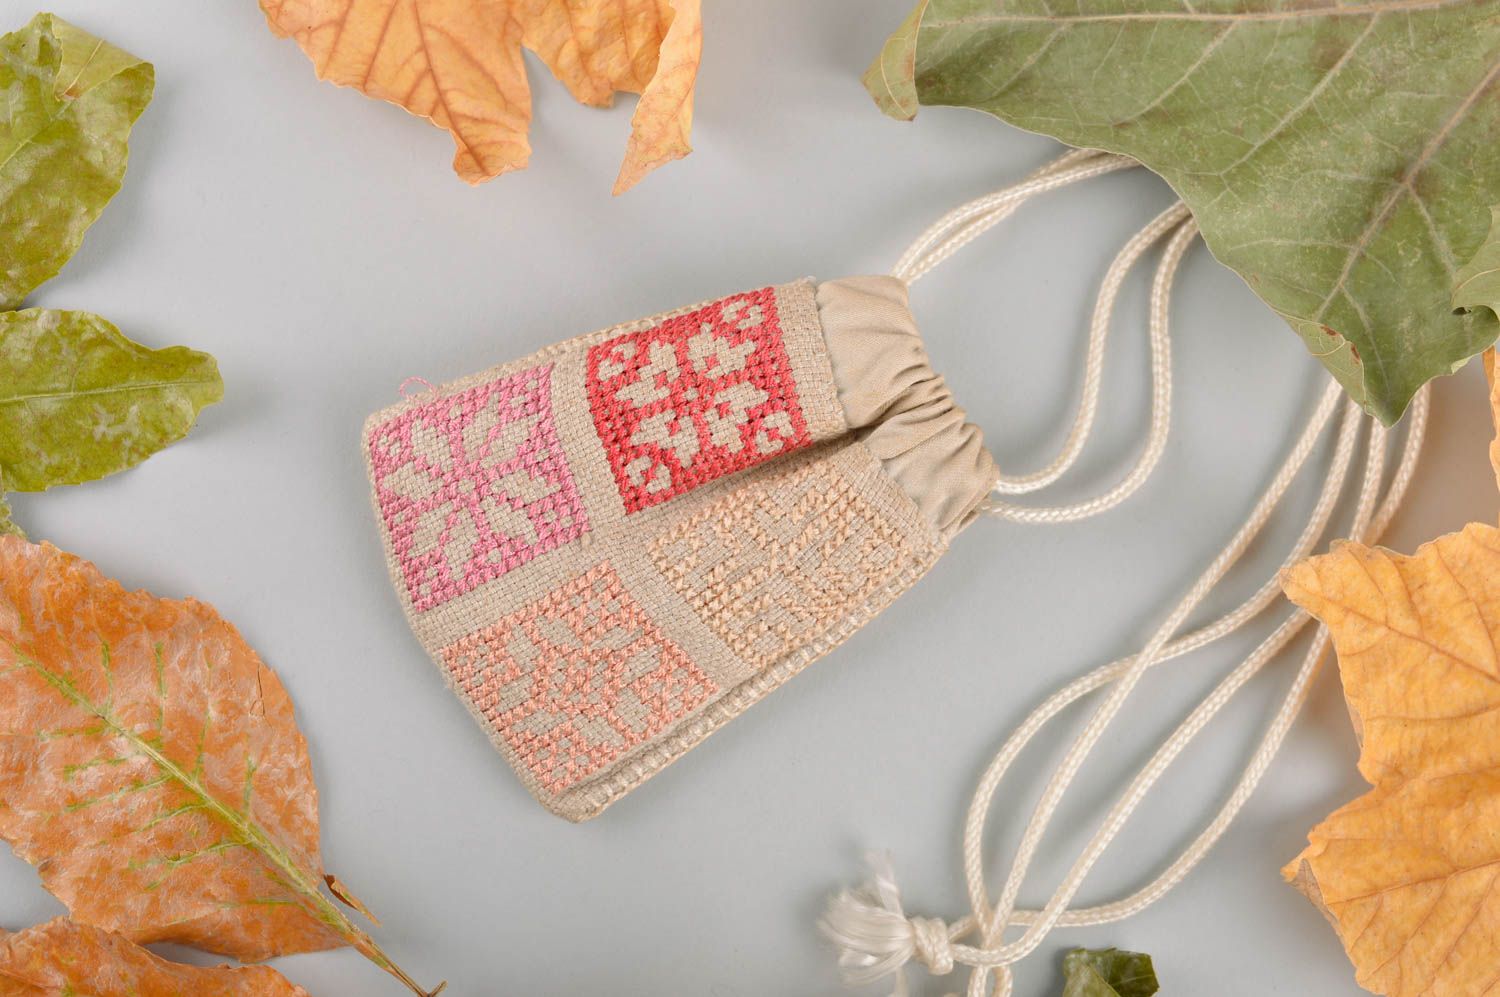 Unusual handmade fabric pouch textile purse for women handmade accessories photo 1